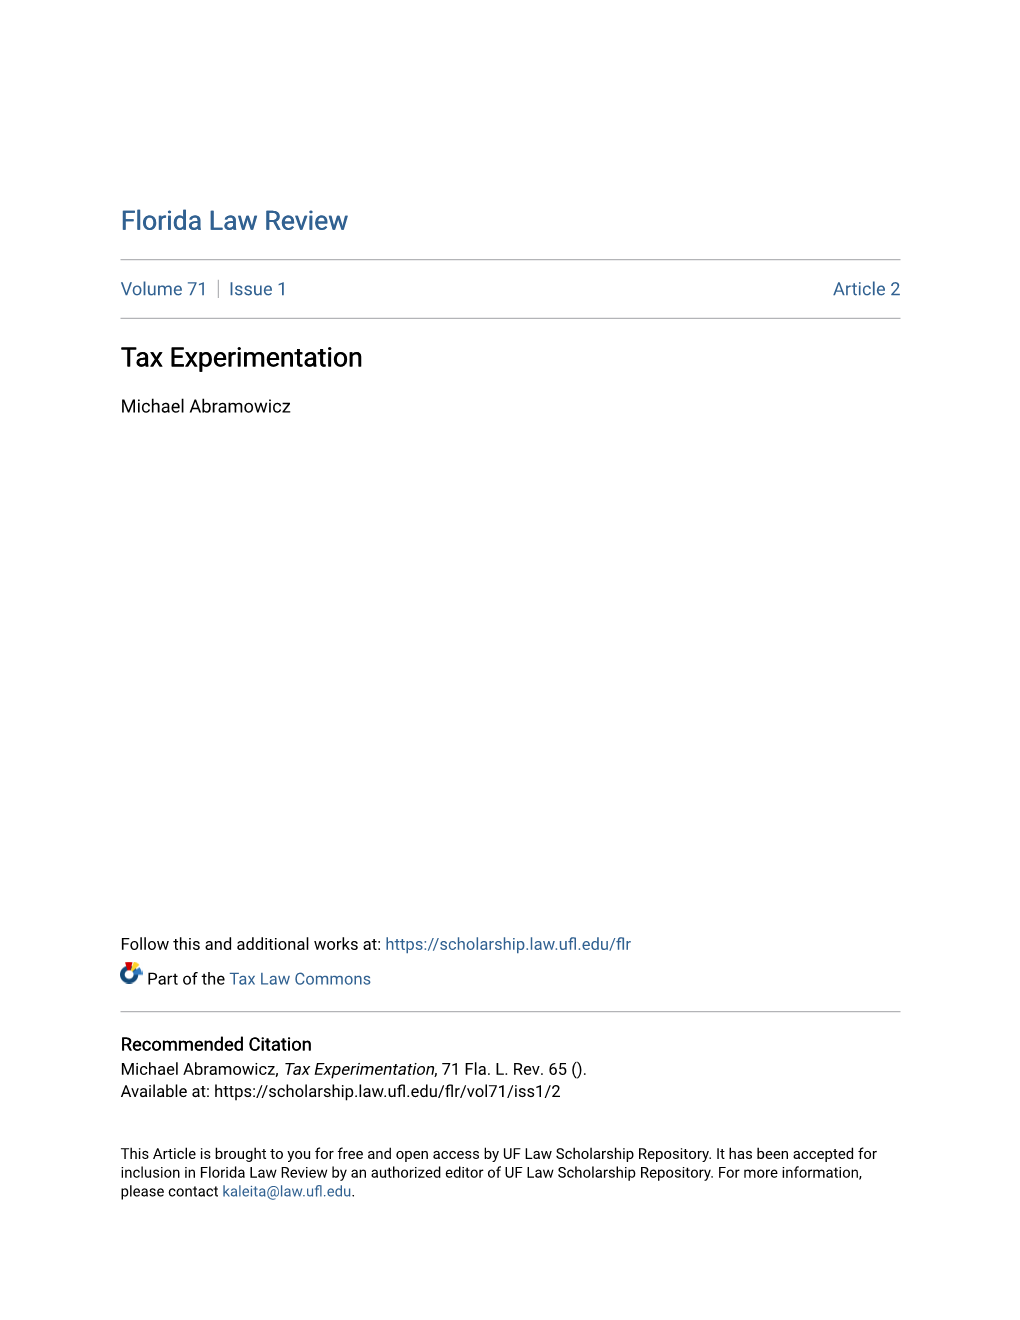 Tax Experimentation